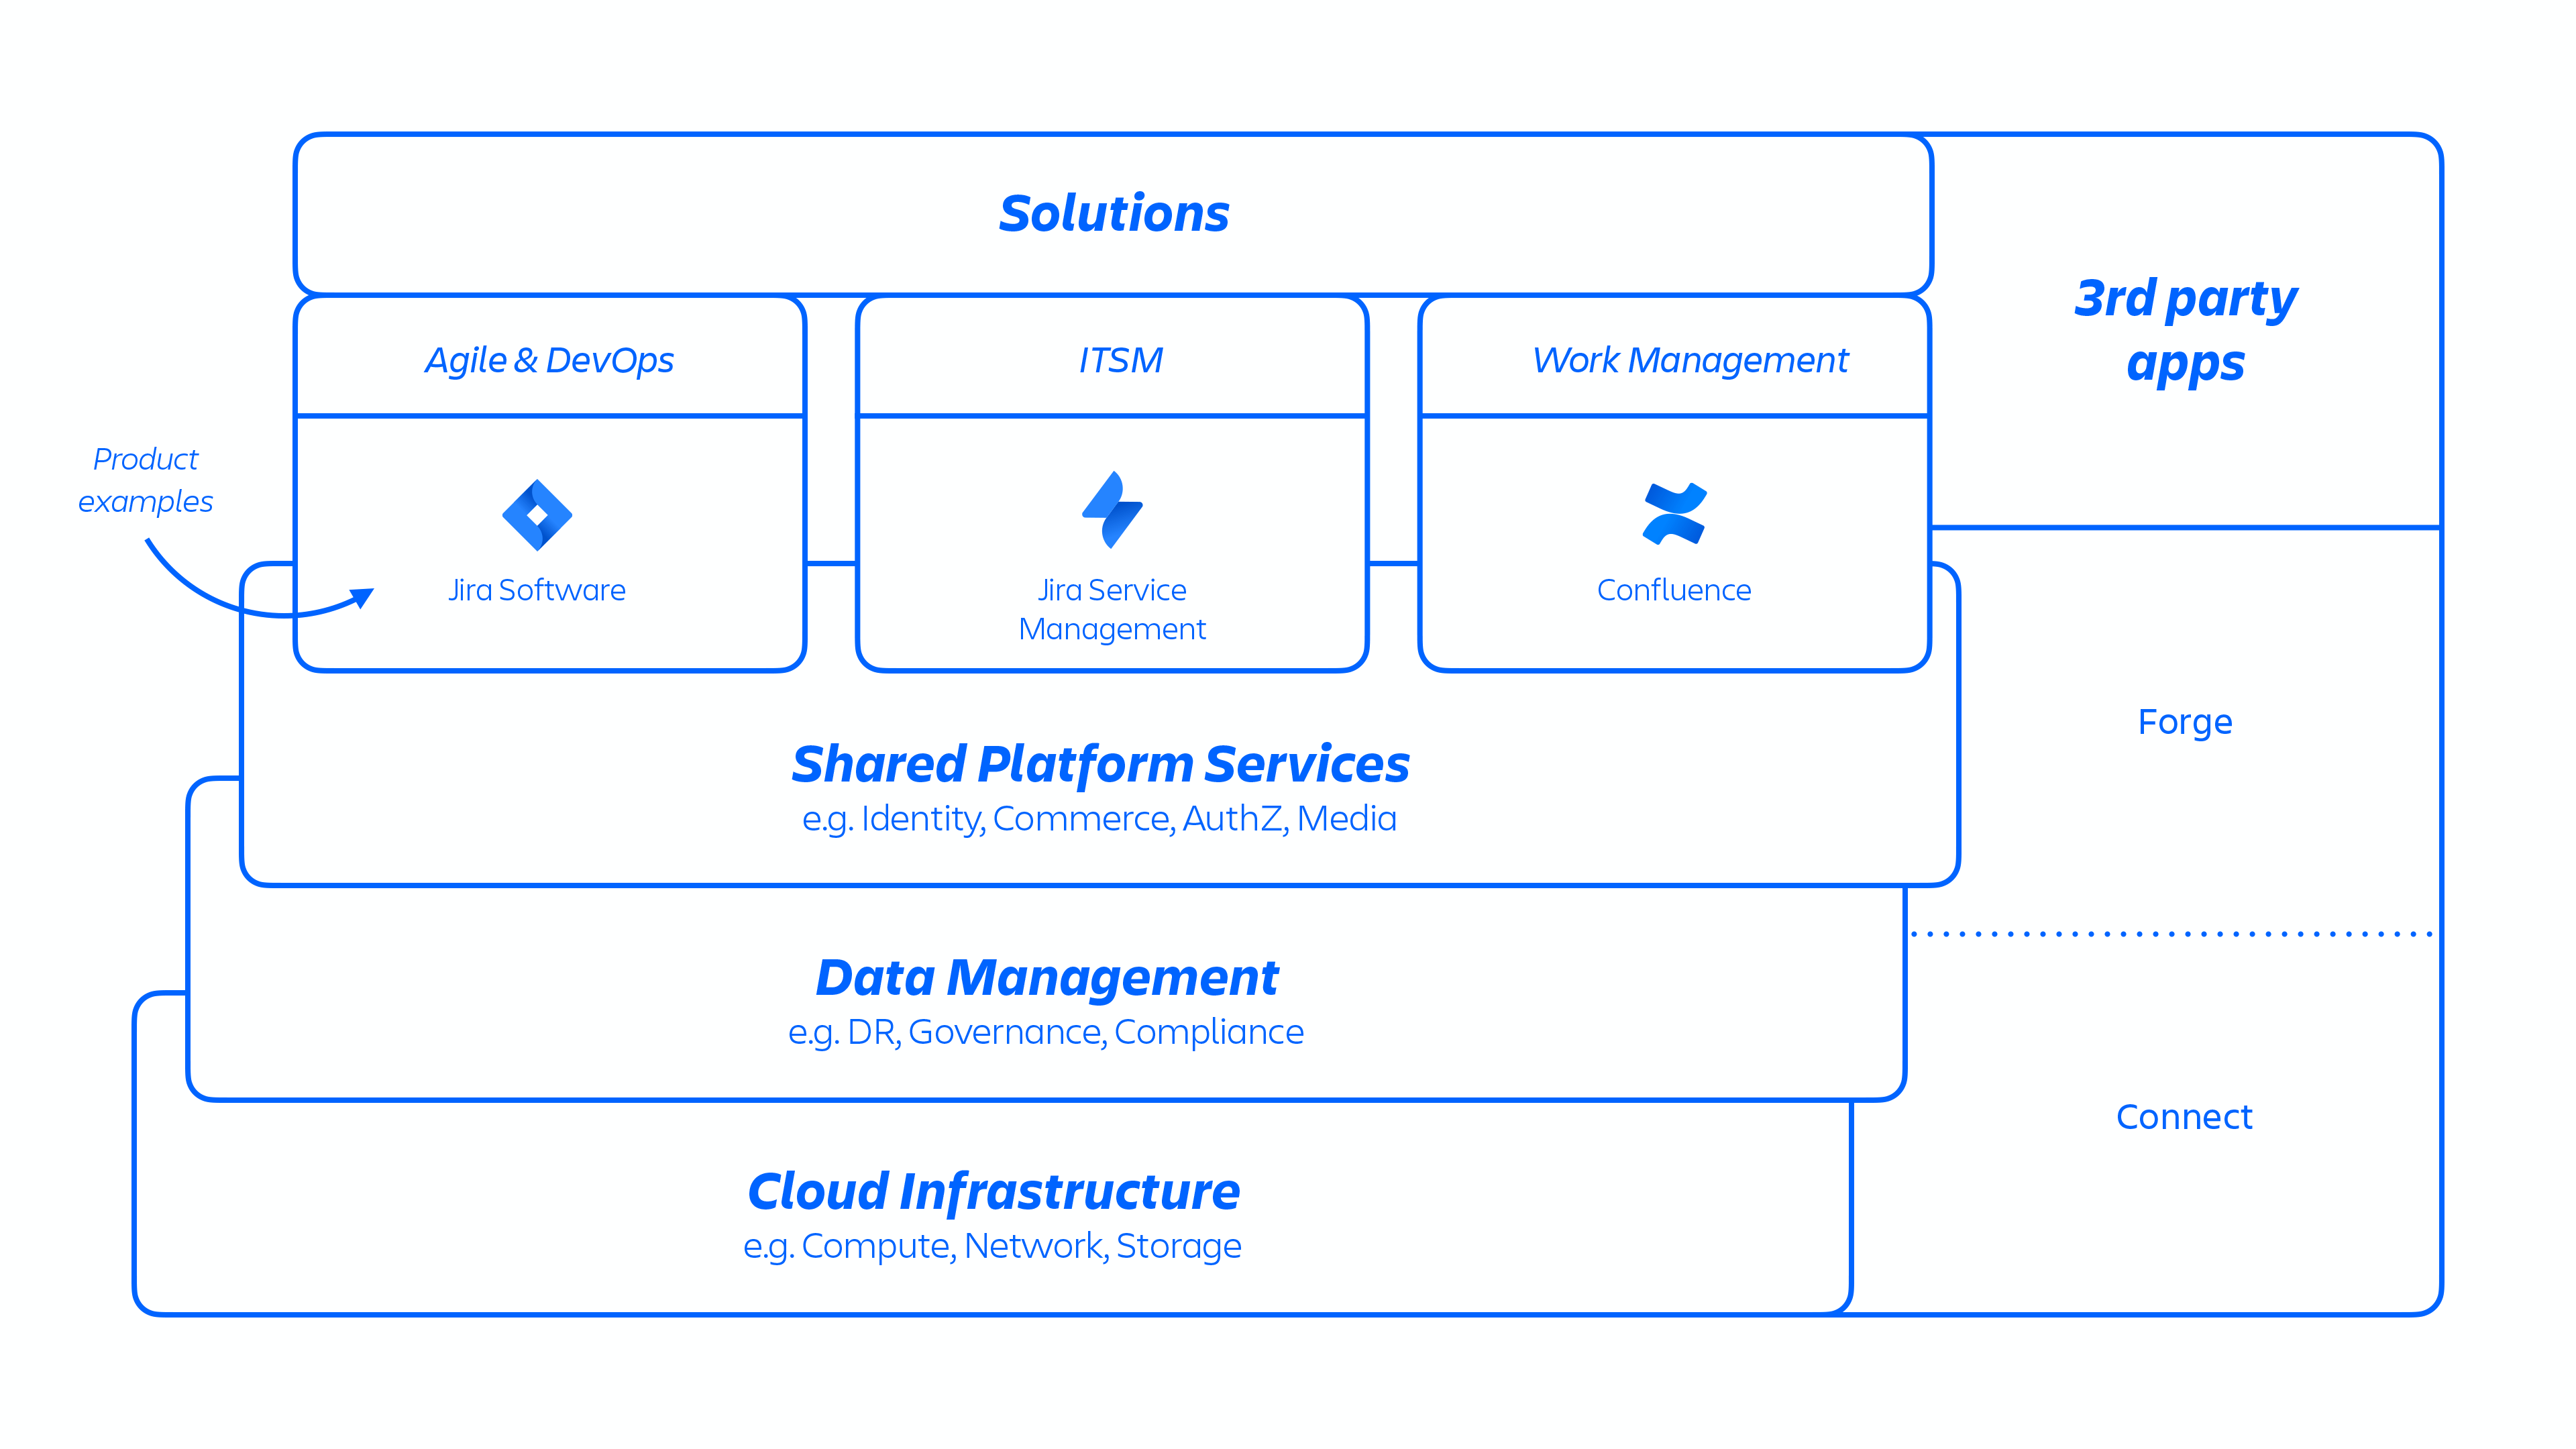 Arquitetura da plataforma Atlassian